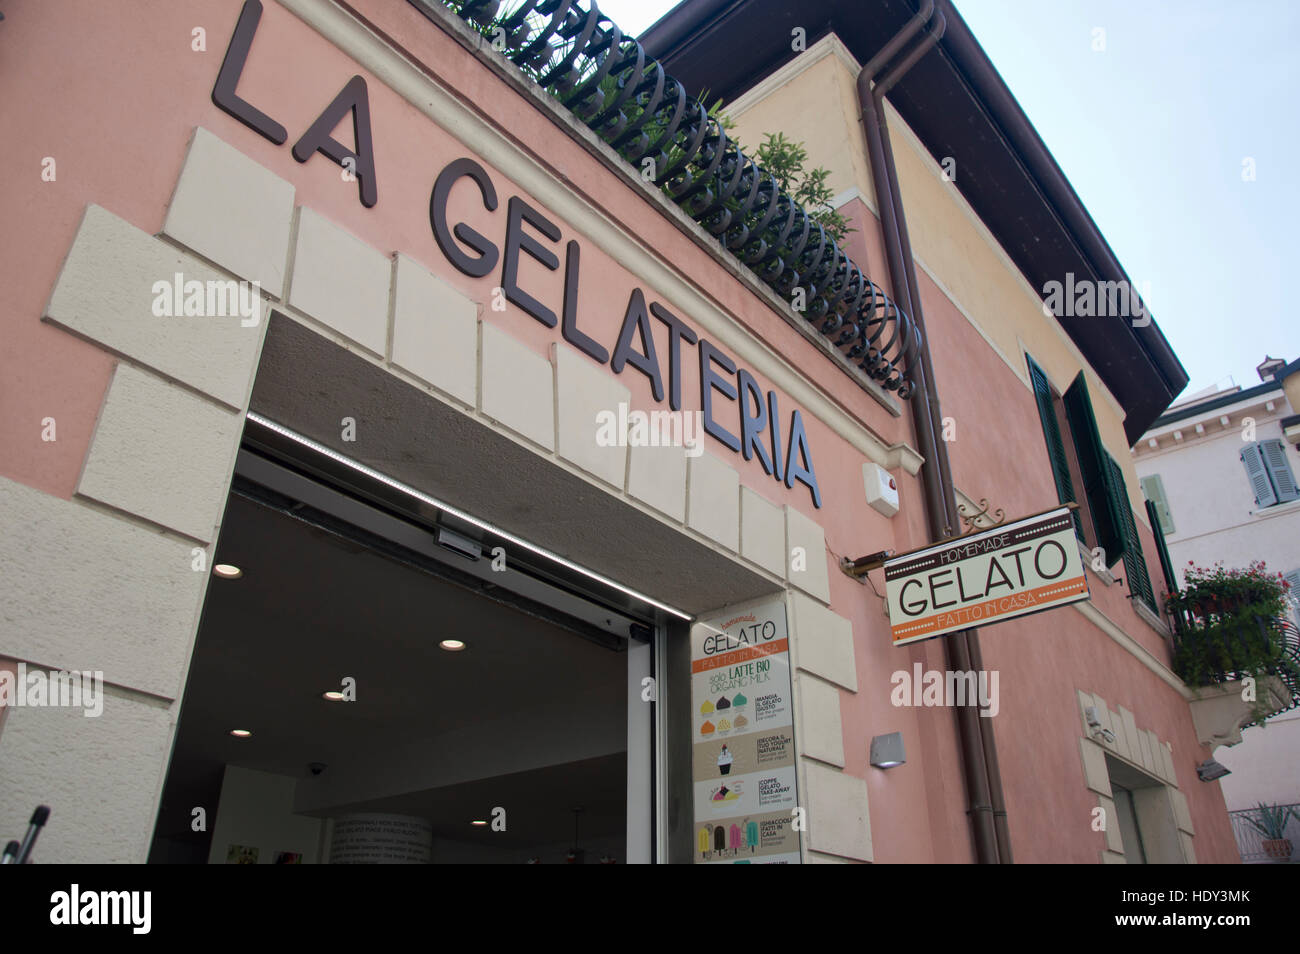 Traditional ice-cream sign, Peschiera del Garda, Italy. Stock Photo